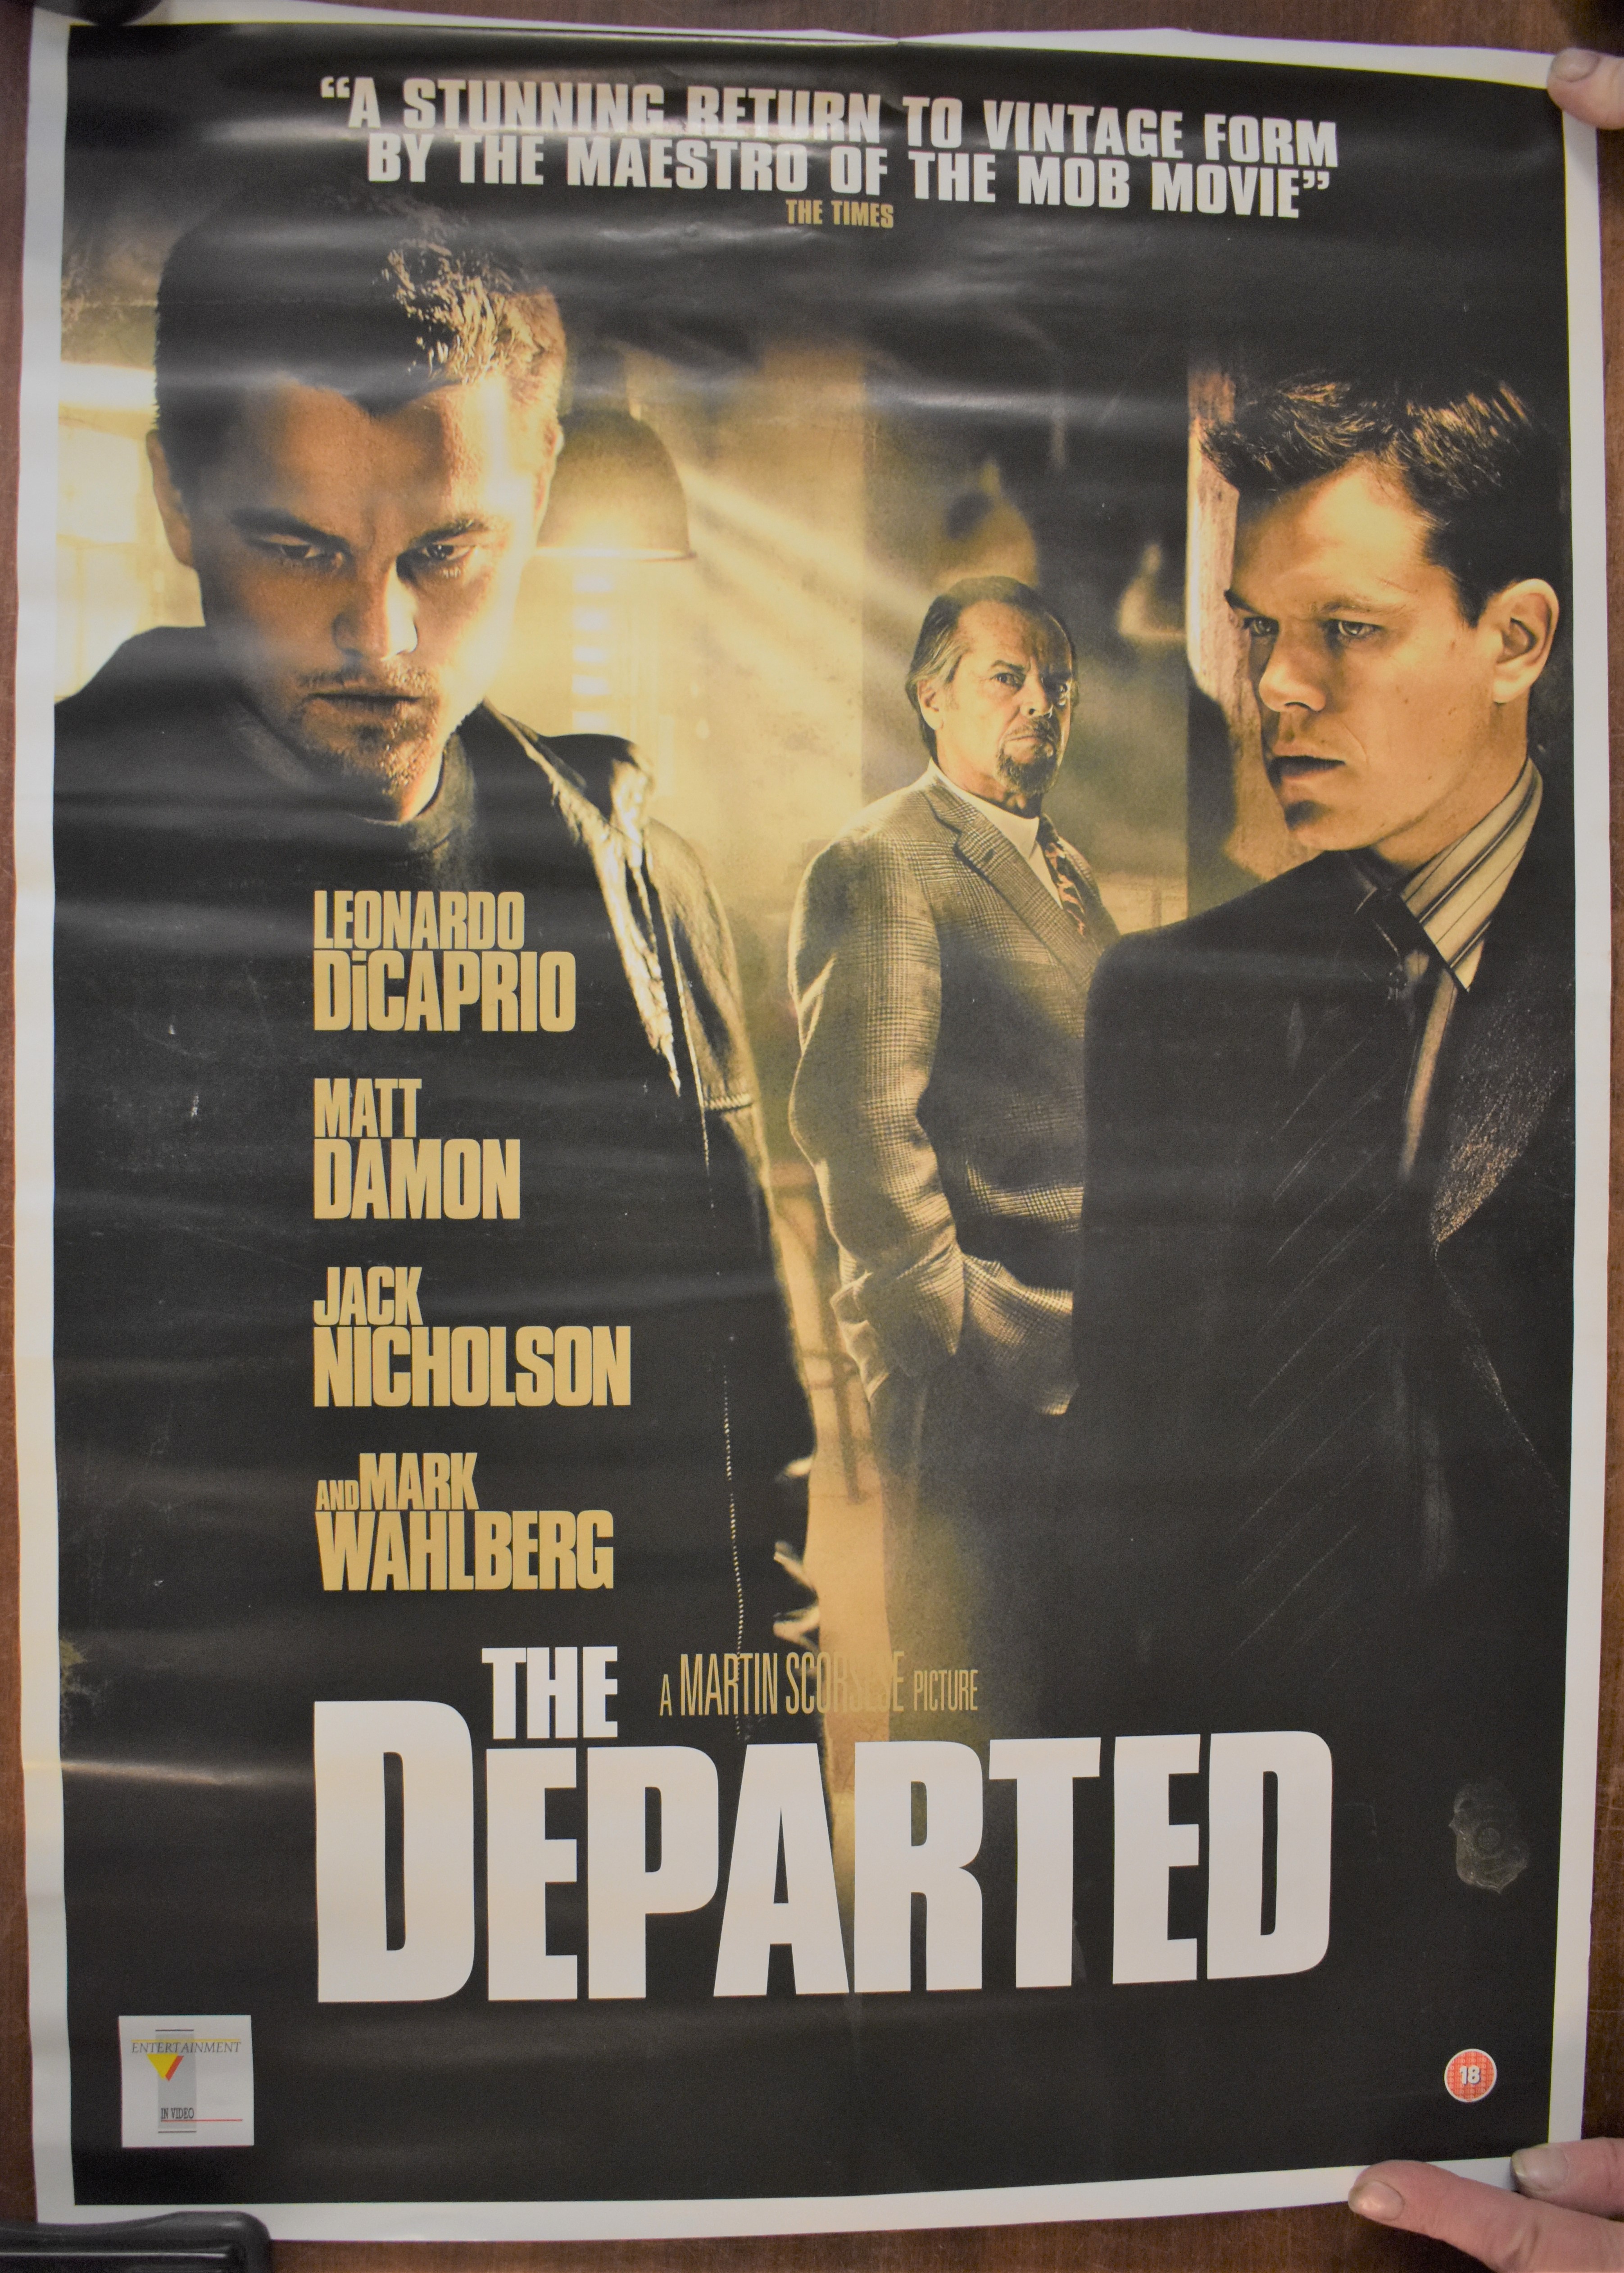 The Departed - Cinematic Poster, starring Leonardo DiCaprio, Matt Damon and Jack Nicholson